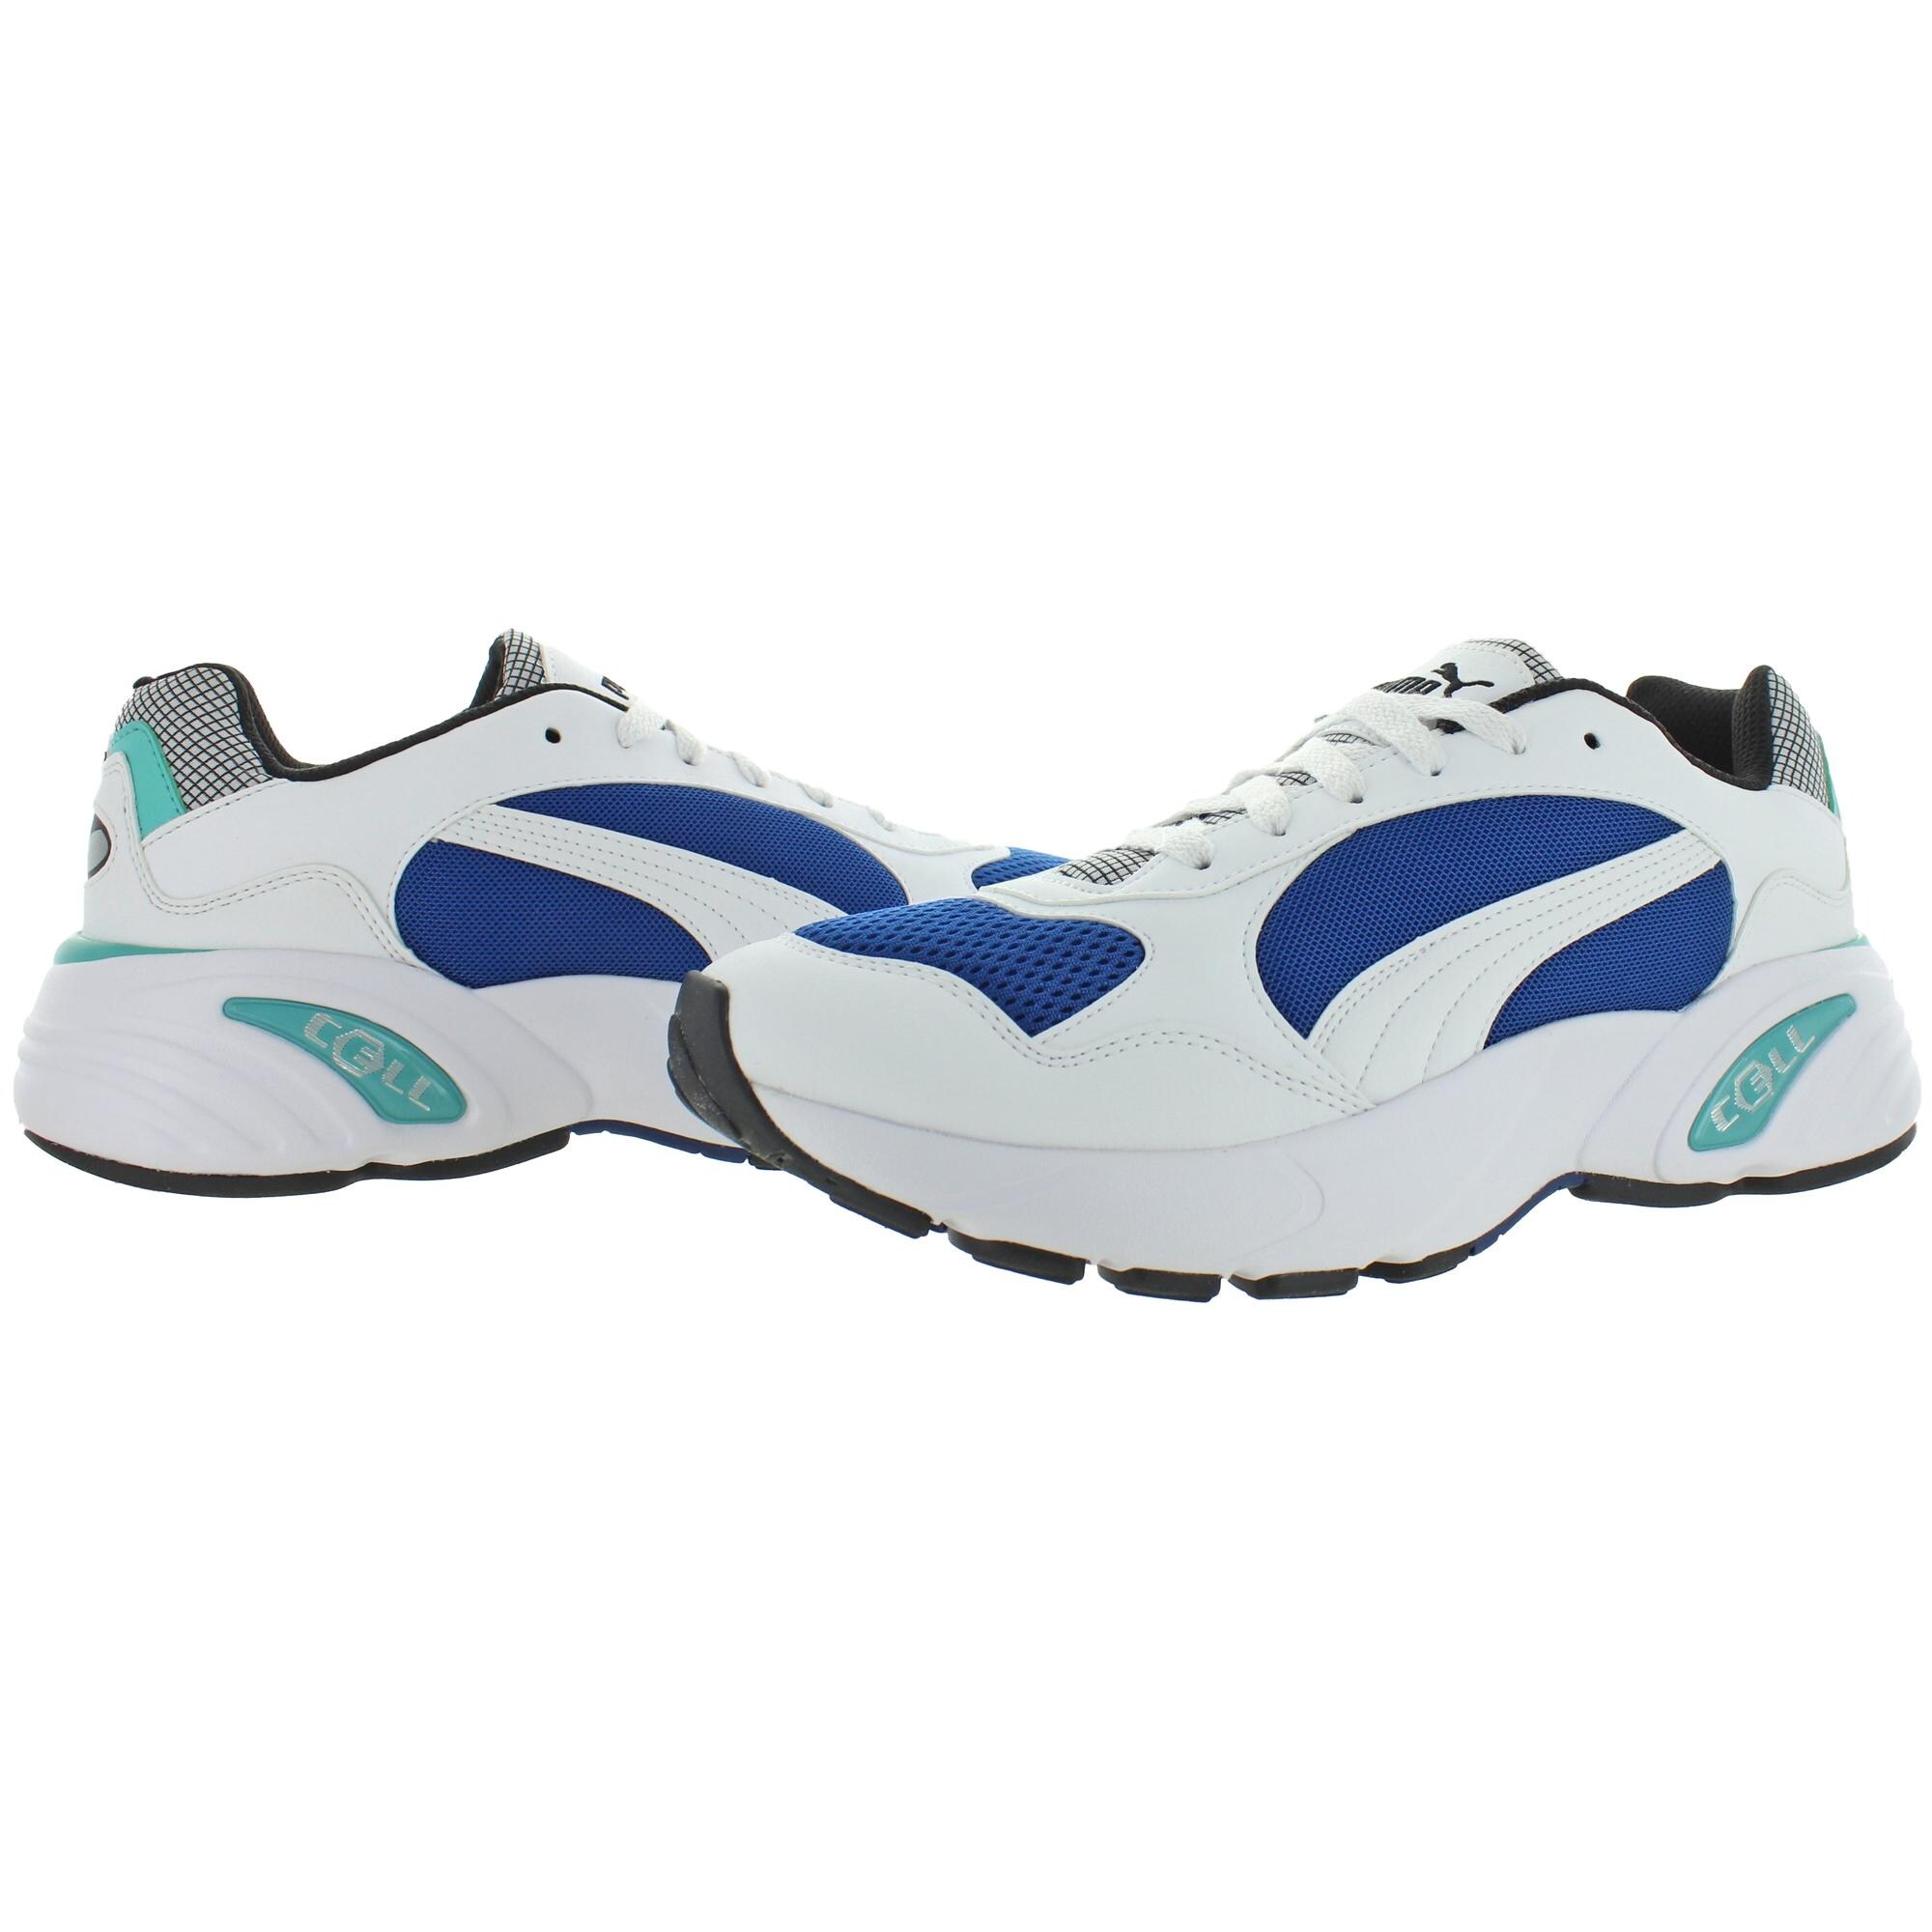 puma blue casual shoes